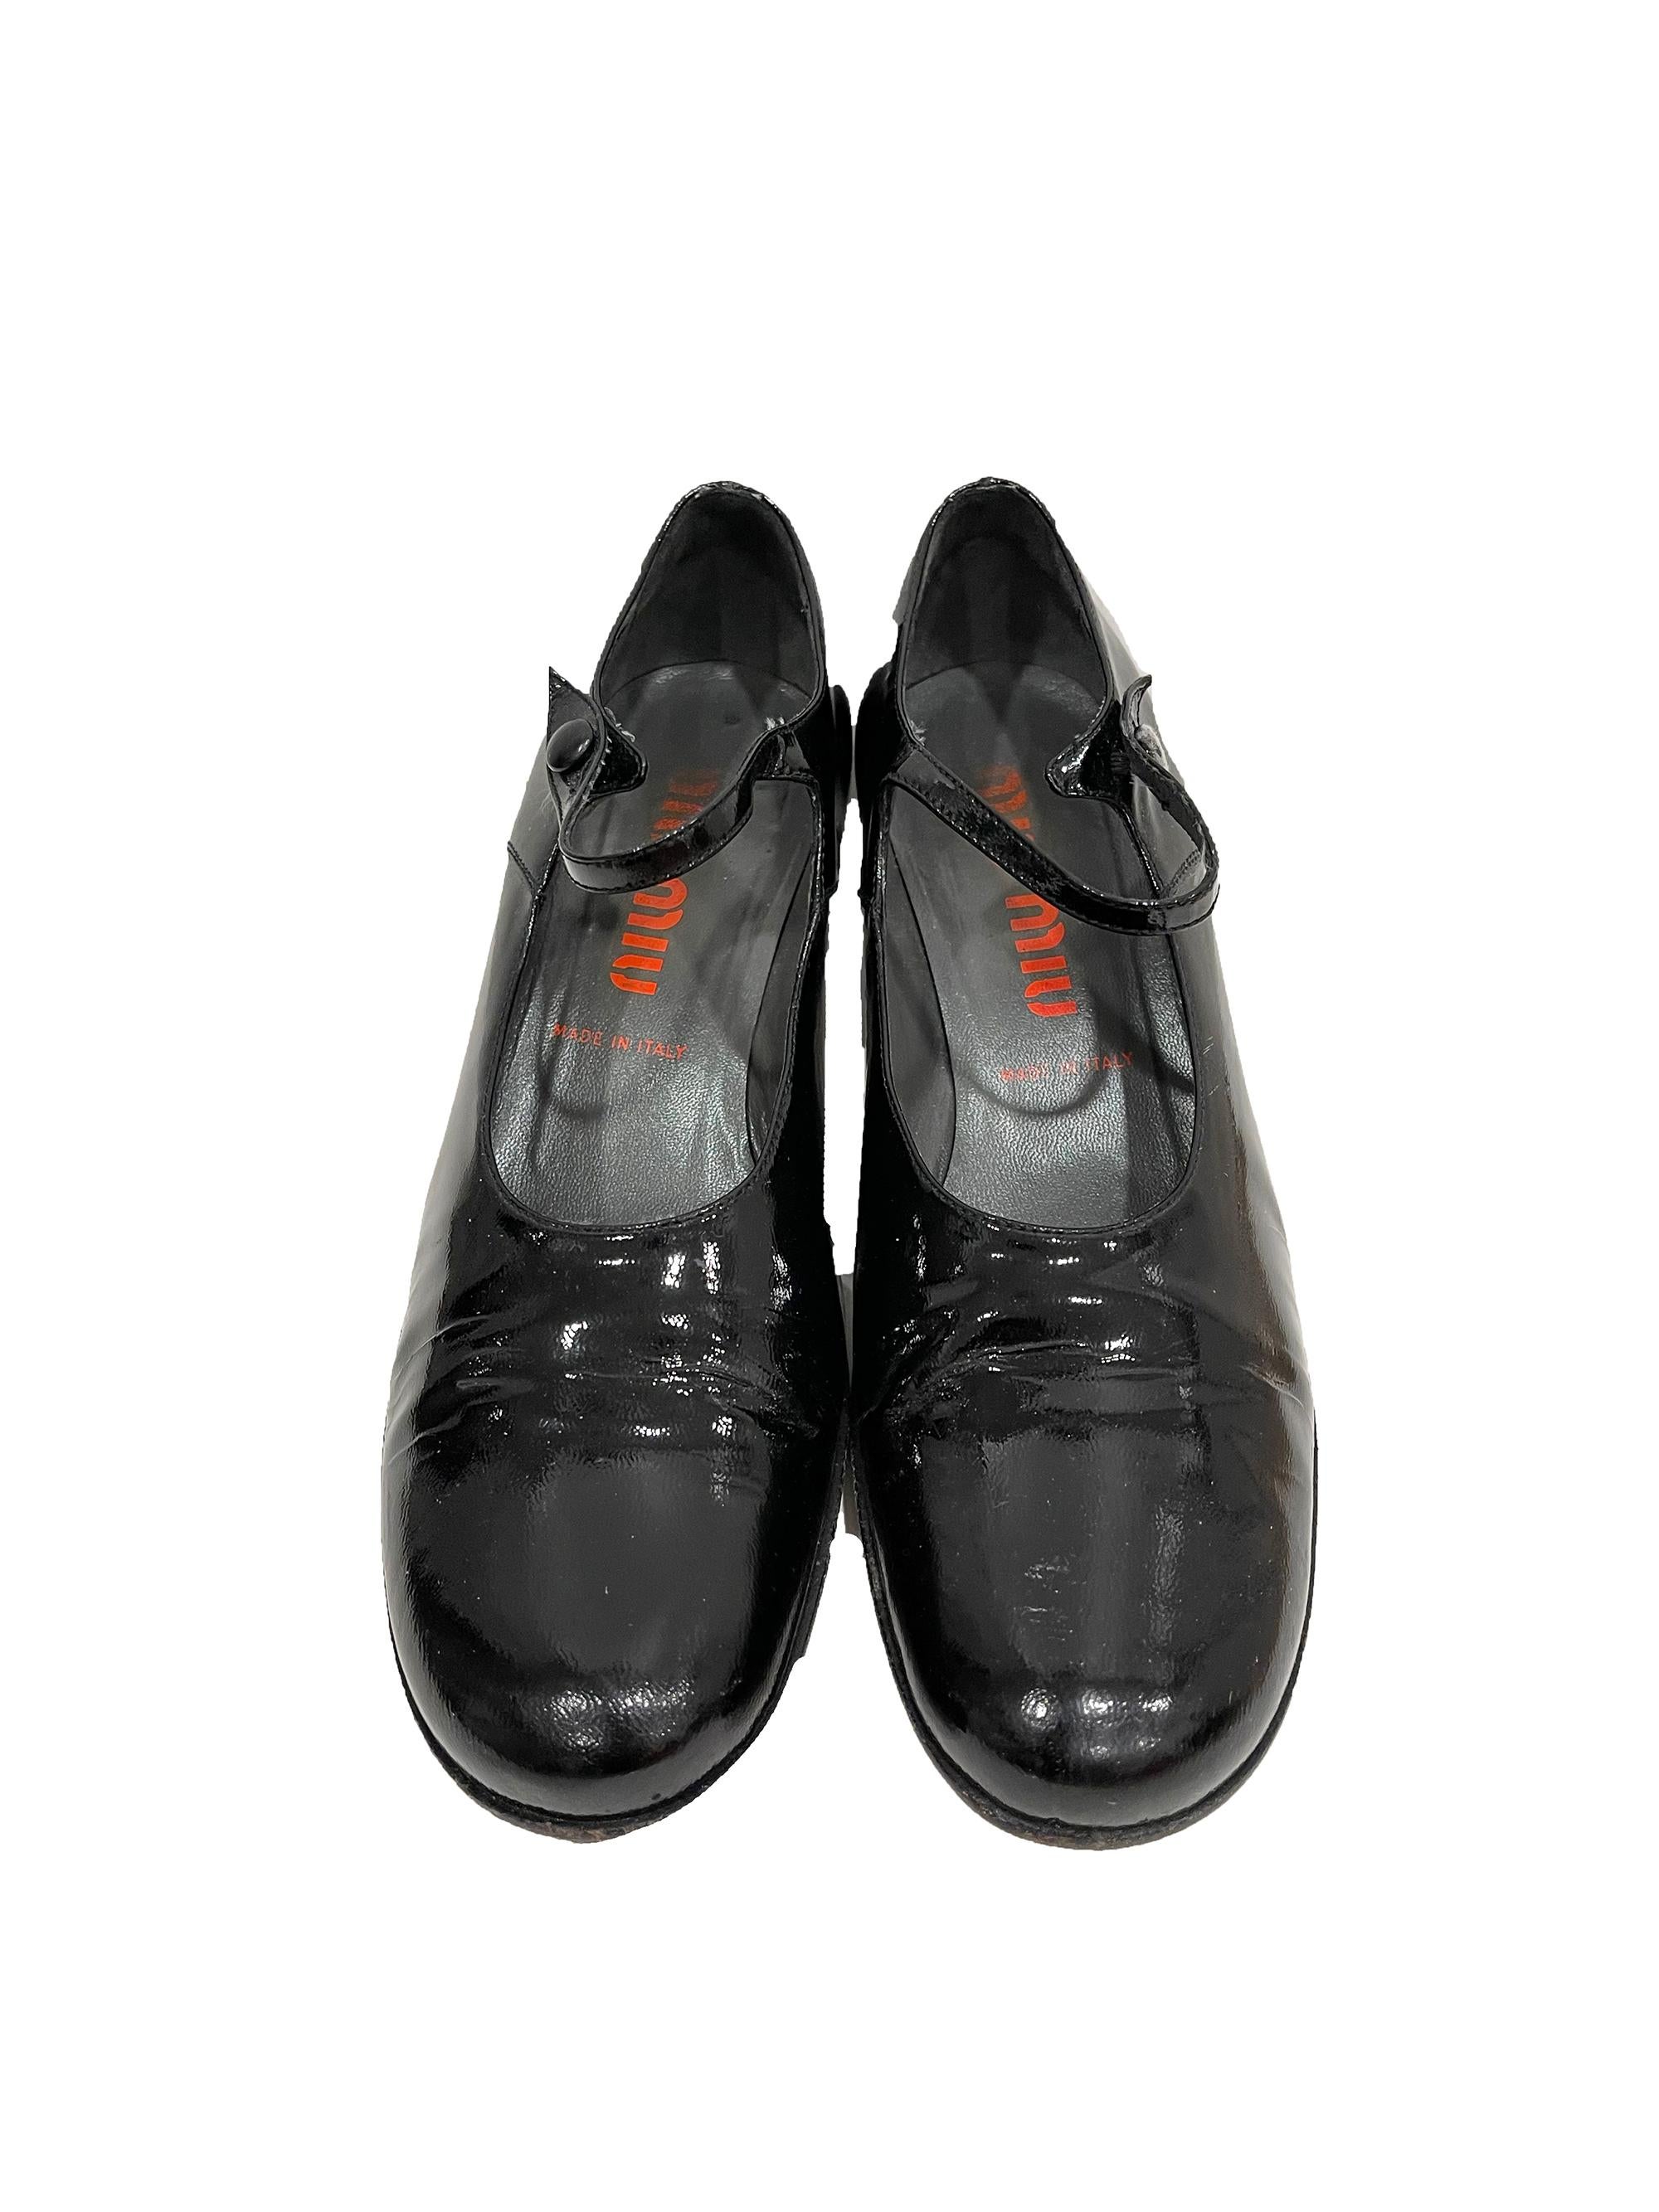 1990s Miu Miu patent leather kitten heels black
condition: Good, all over wear
sz 38 1/2